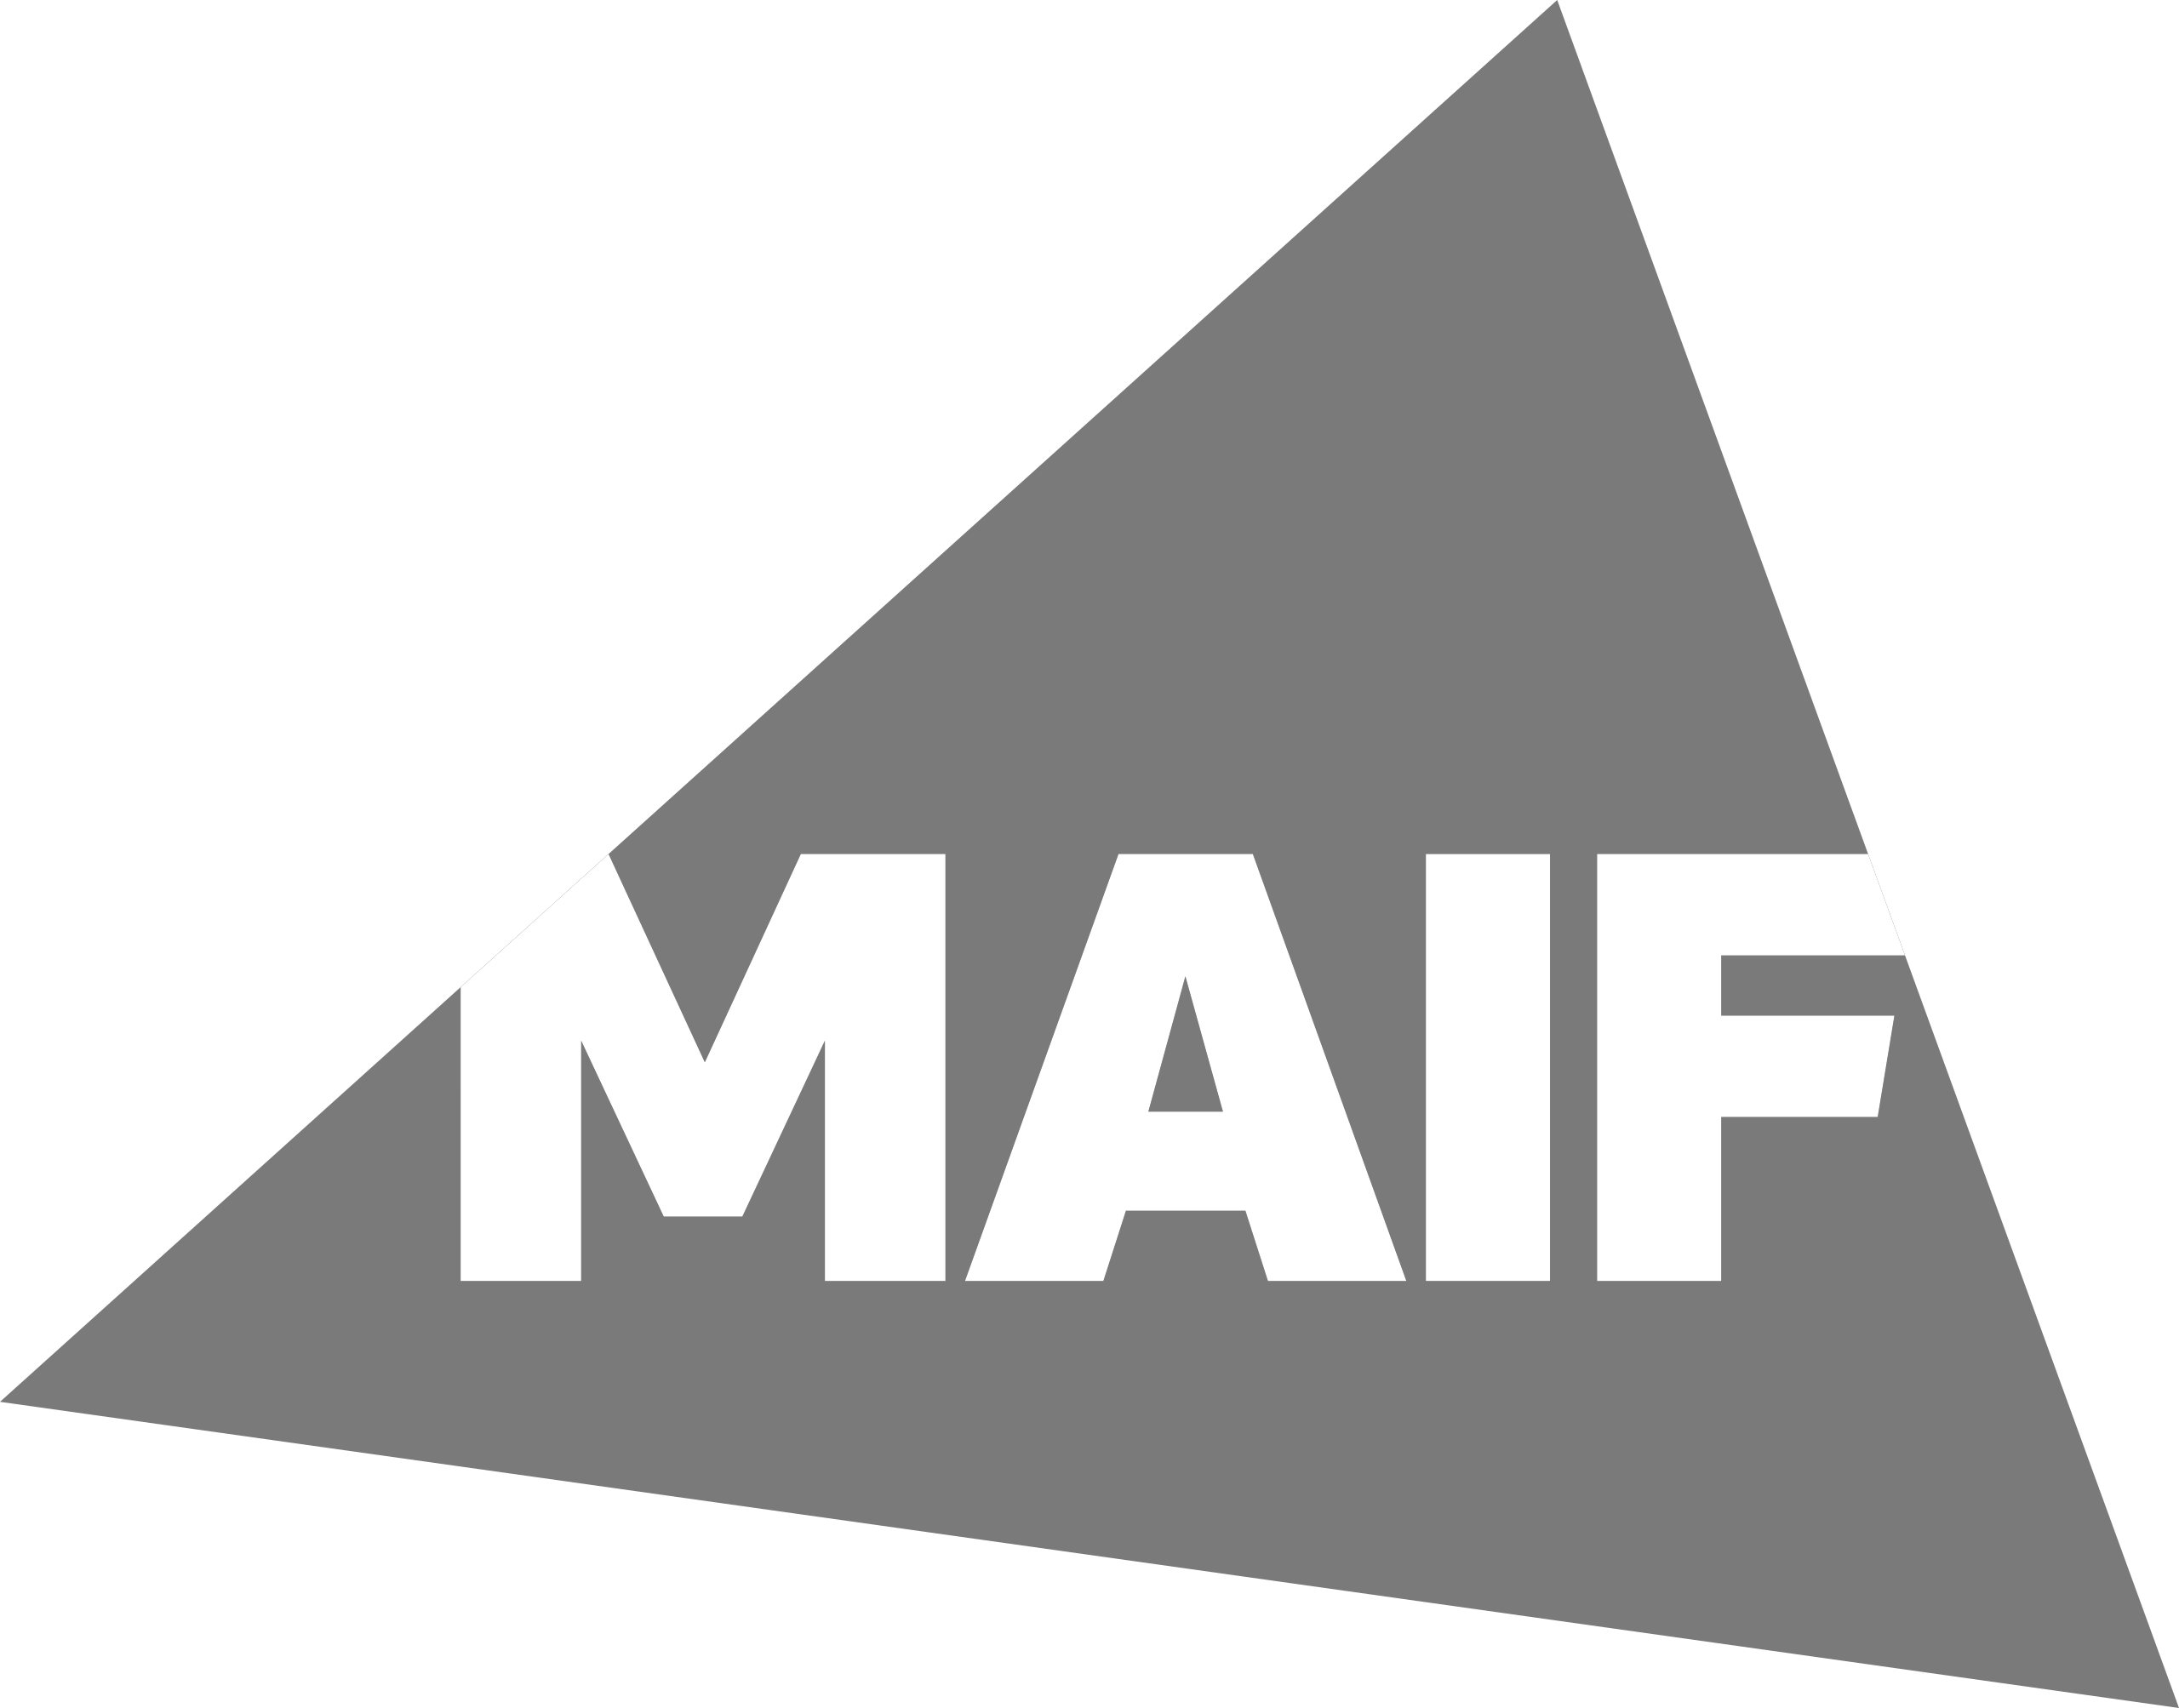 Logo Maif 2019.svg